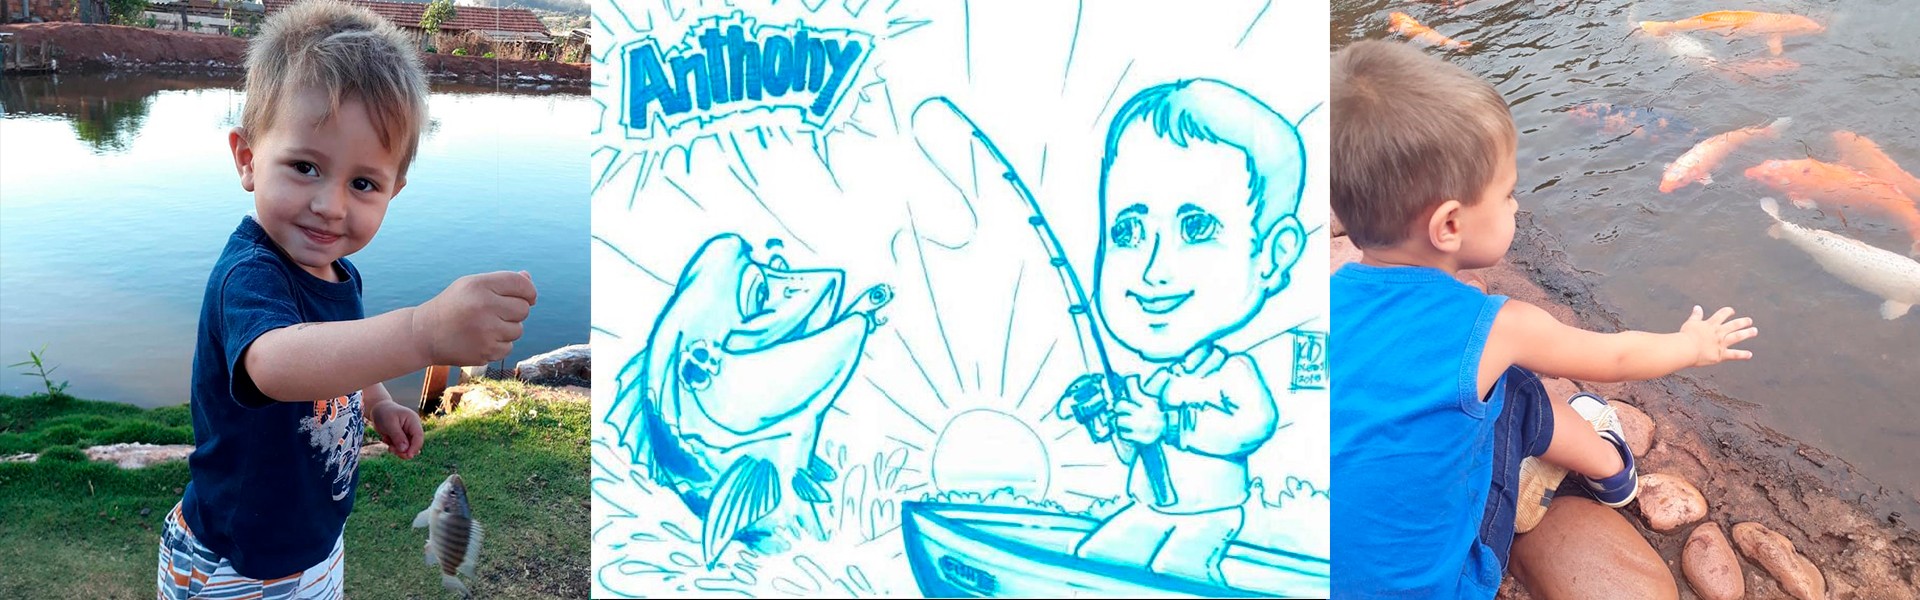 Fish TV vira tema de festa de aniversário